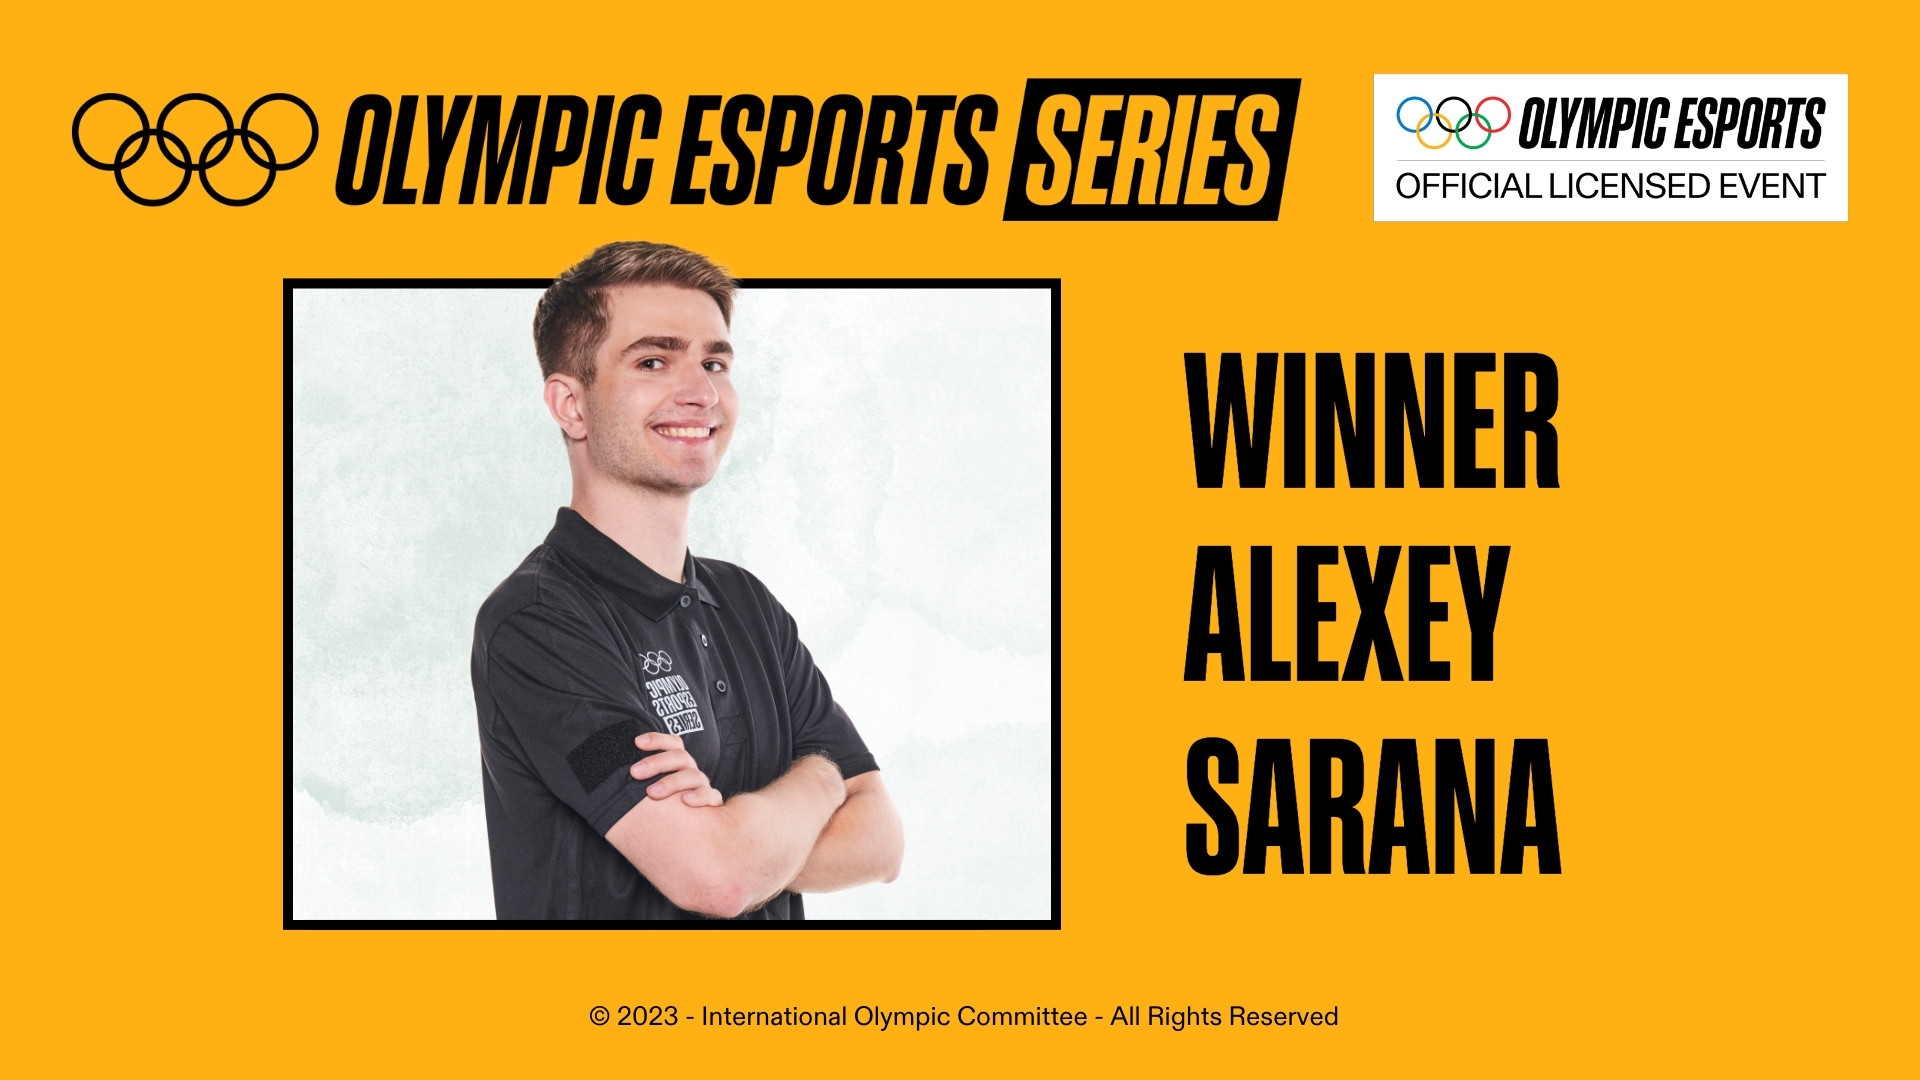 Alexey Sarana was the winner of the inaugural Olympic Esports Week chess tournament ©IOC